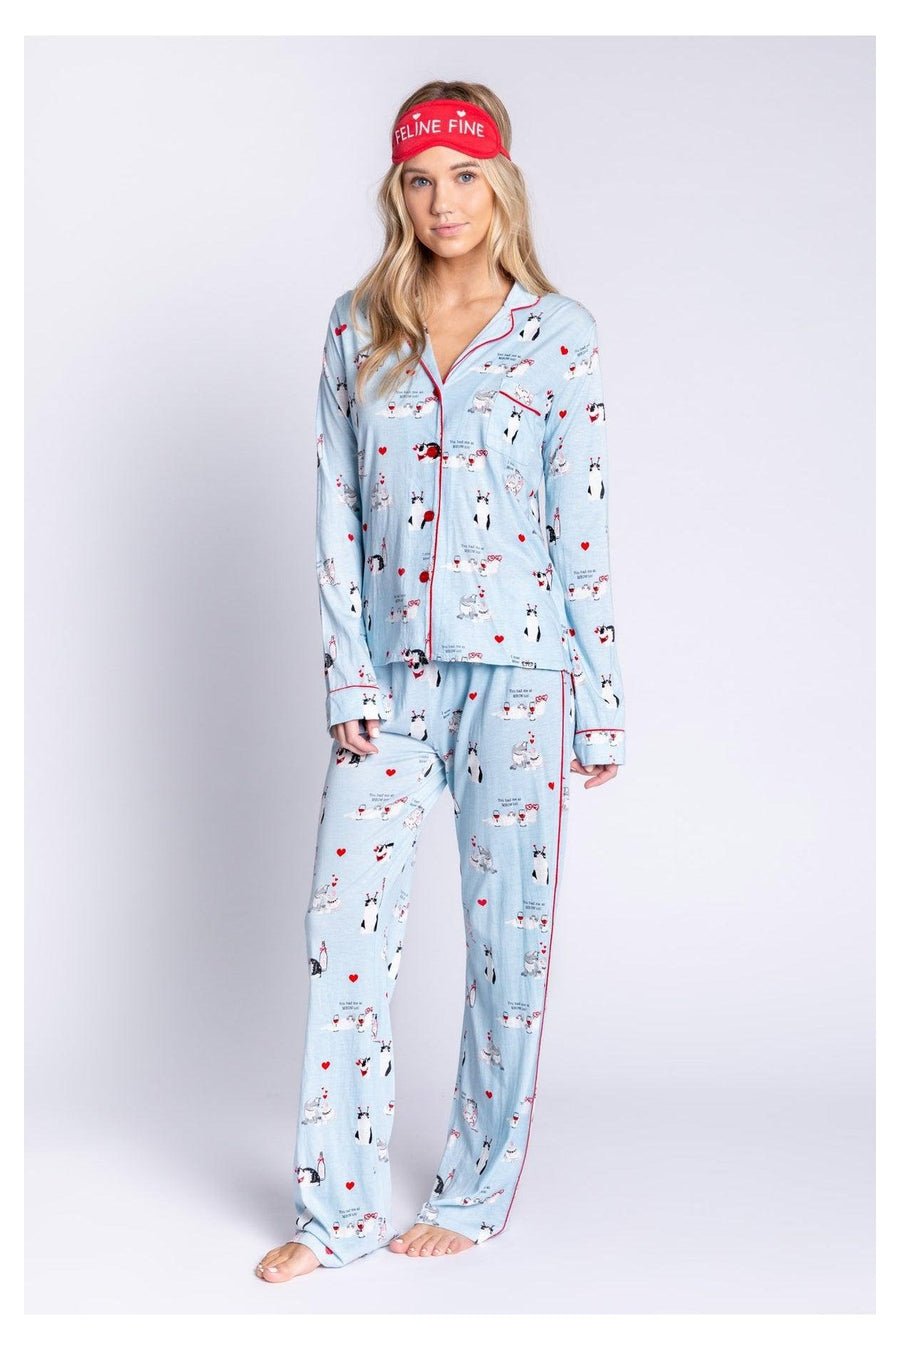 Shop PJ Salvage Love is a Four Letter Word Feline Pyjama Set - Premium Pyjamas from PJ Salvage Online now at Spoiled Brat 